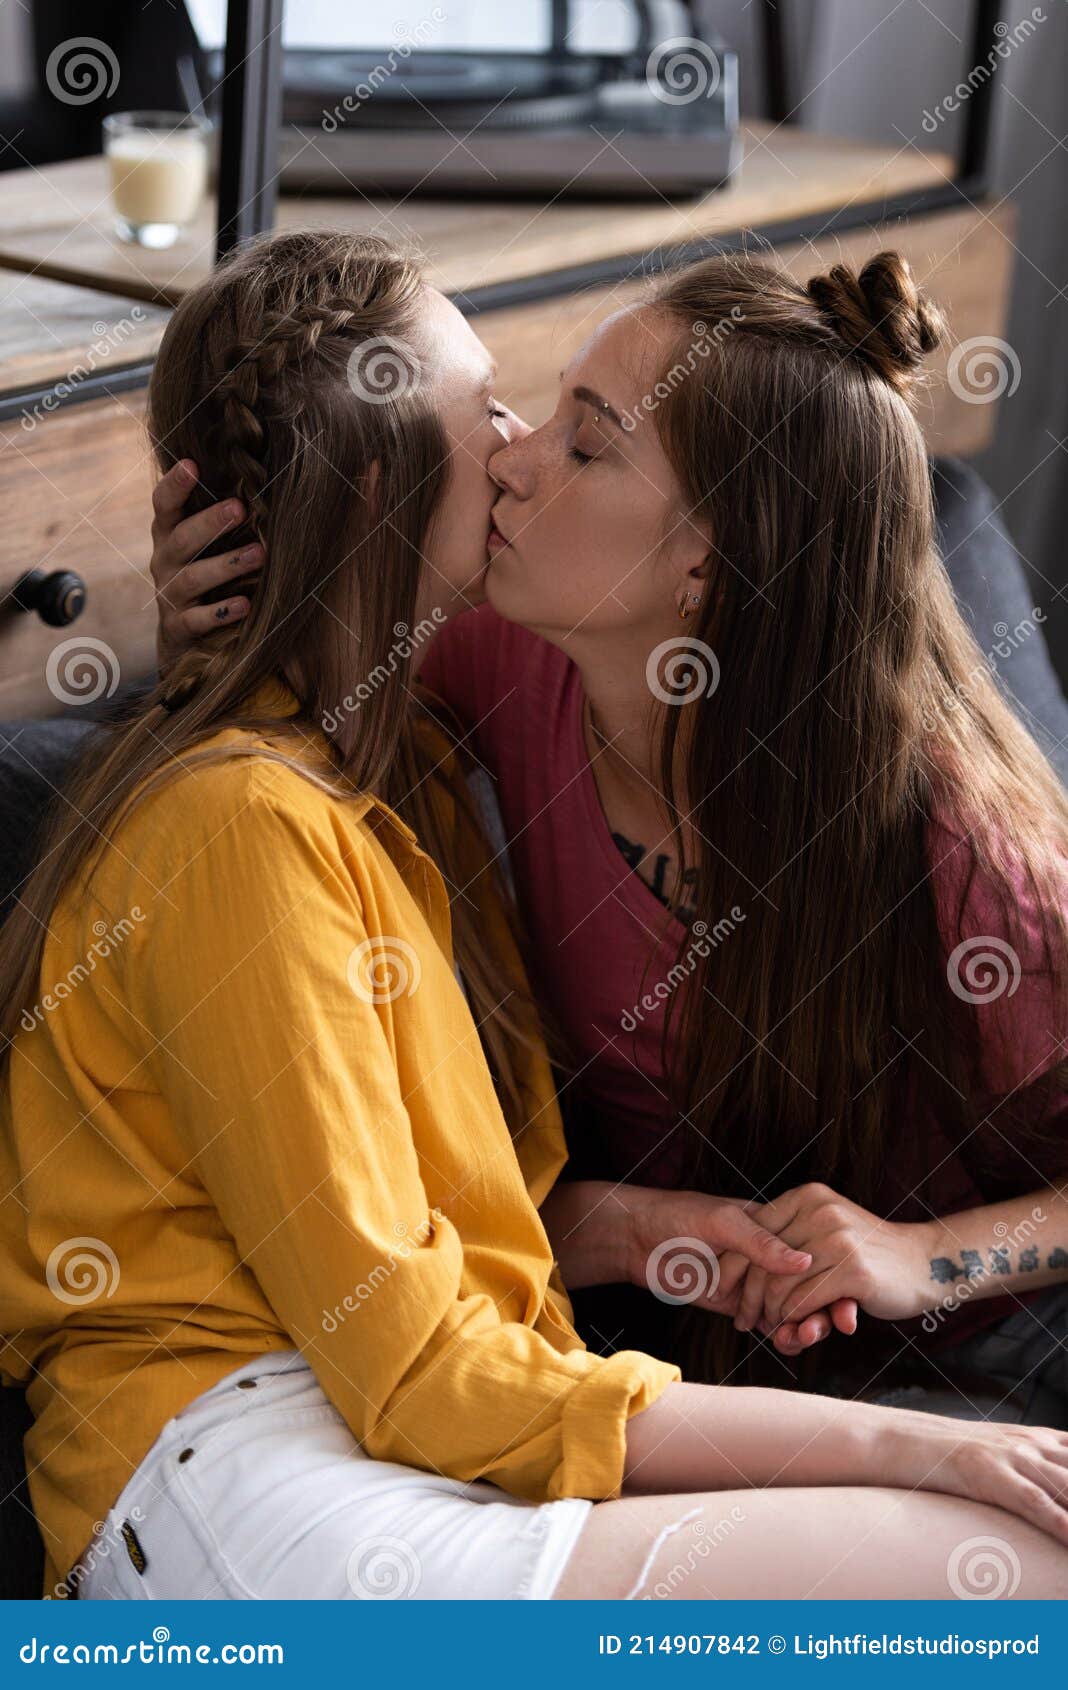 First lesbian kiss composition